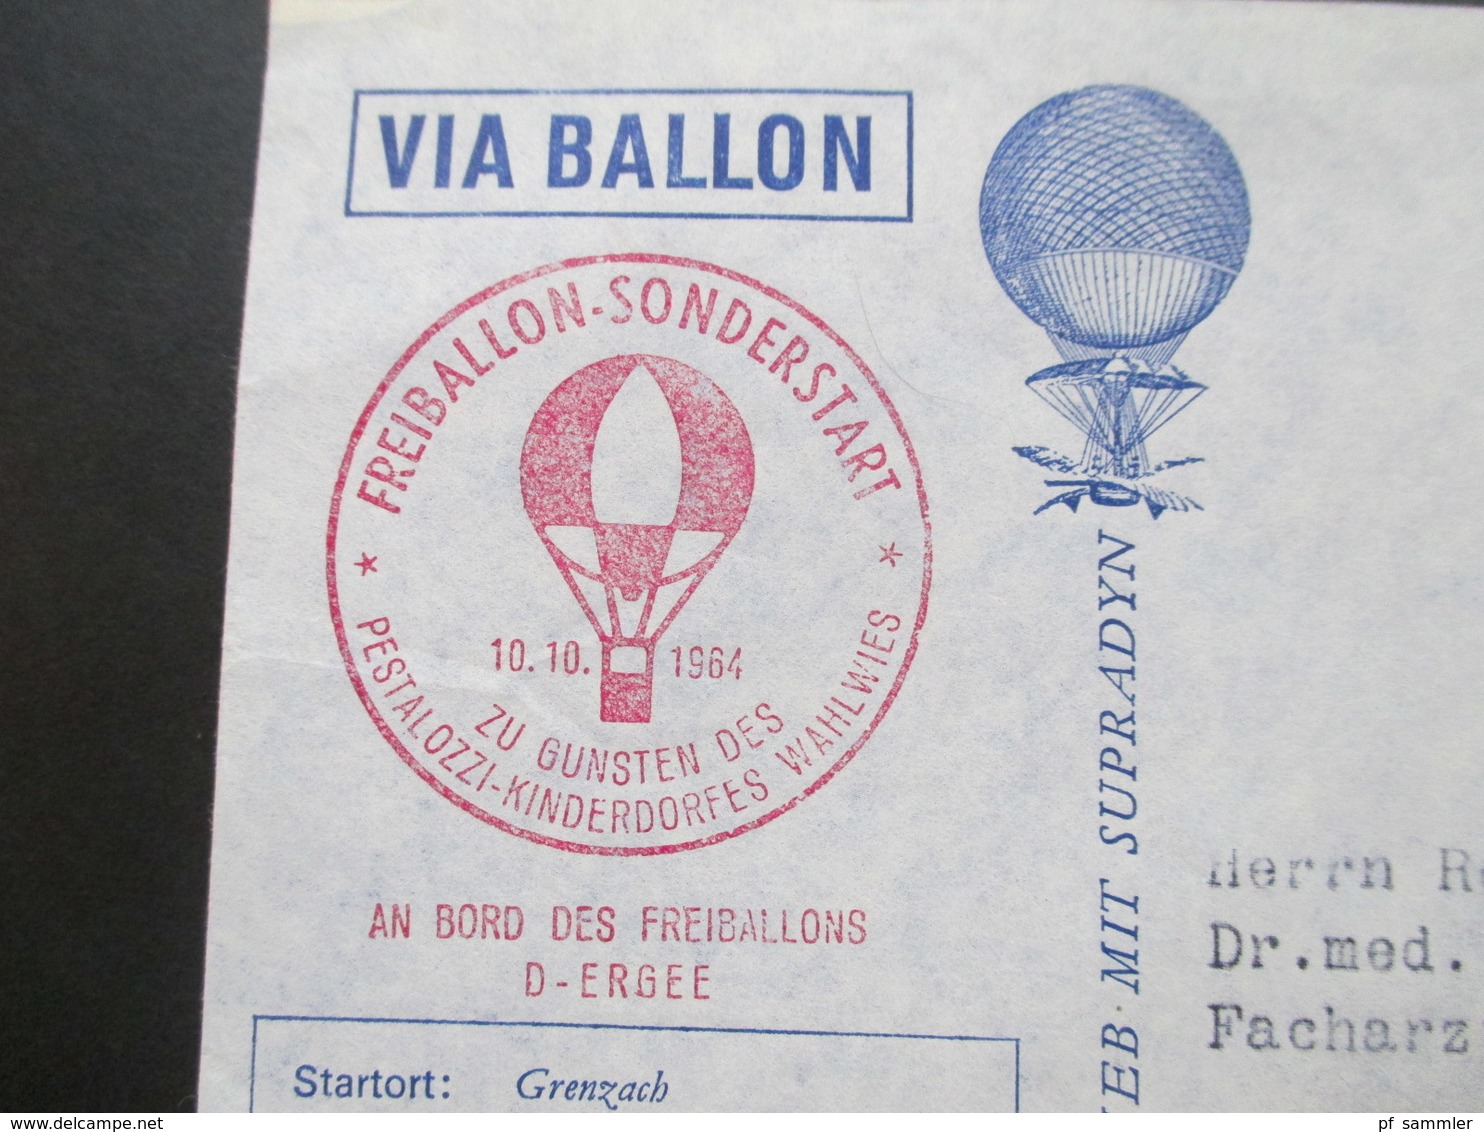 Österreich 1964 Ballonpost Via Ballon. Freiballon Sonderstart Pestalozzi Kinderdorf Wahlwies. D-Ergee. Sonderstempel - Montgolfières